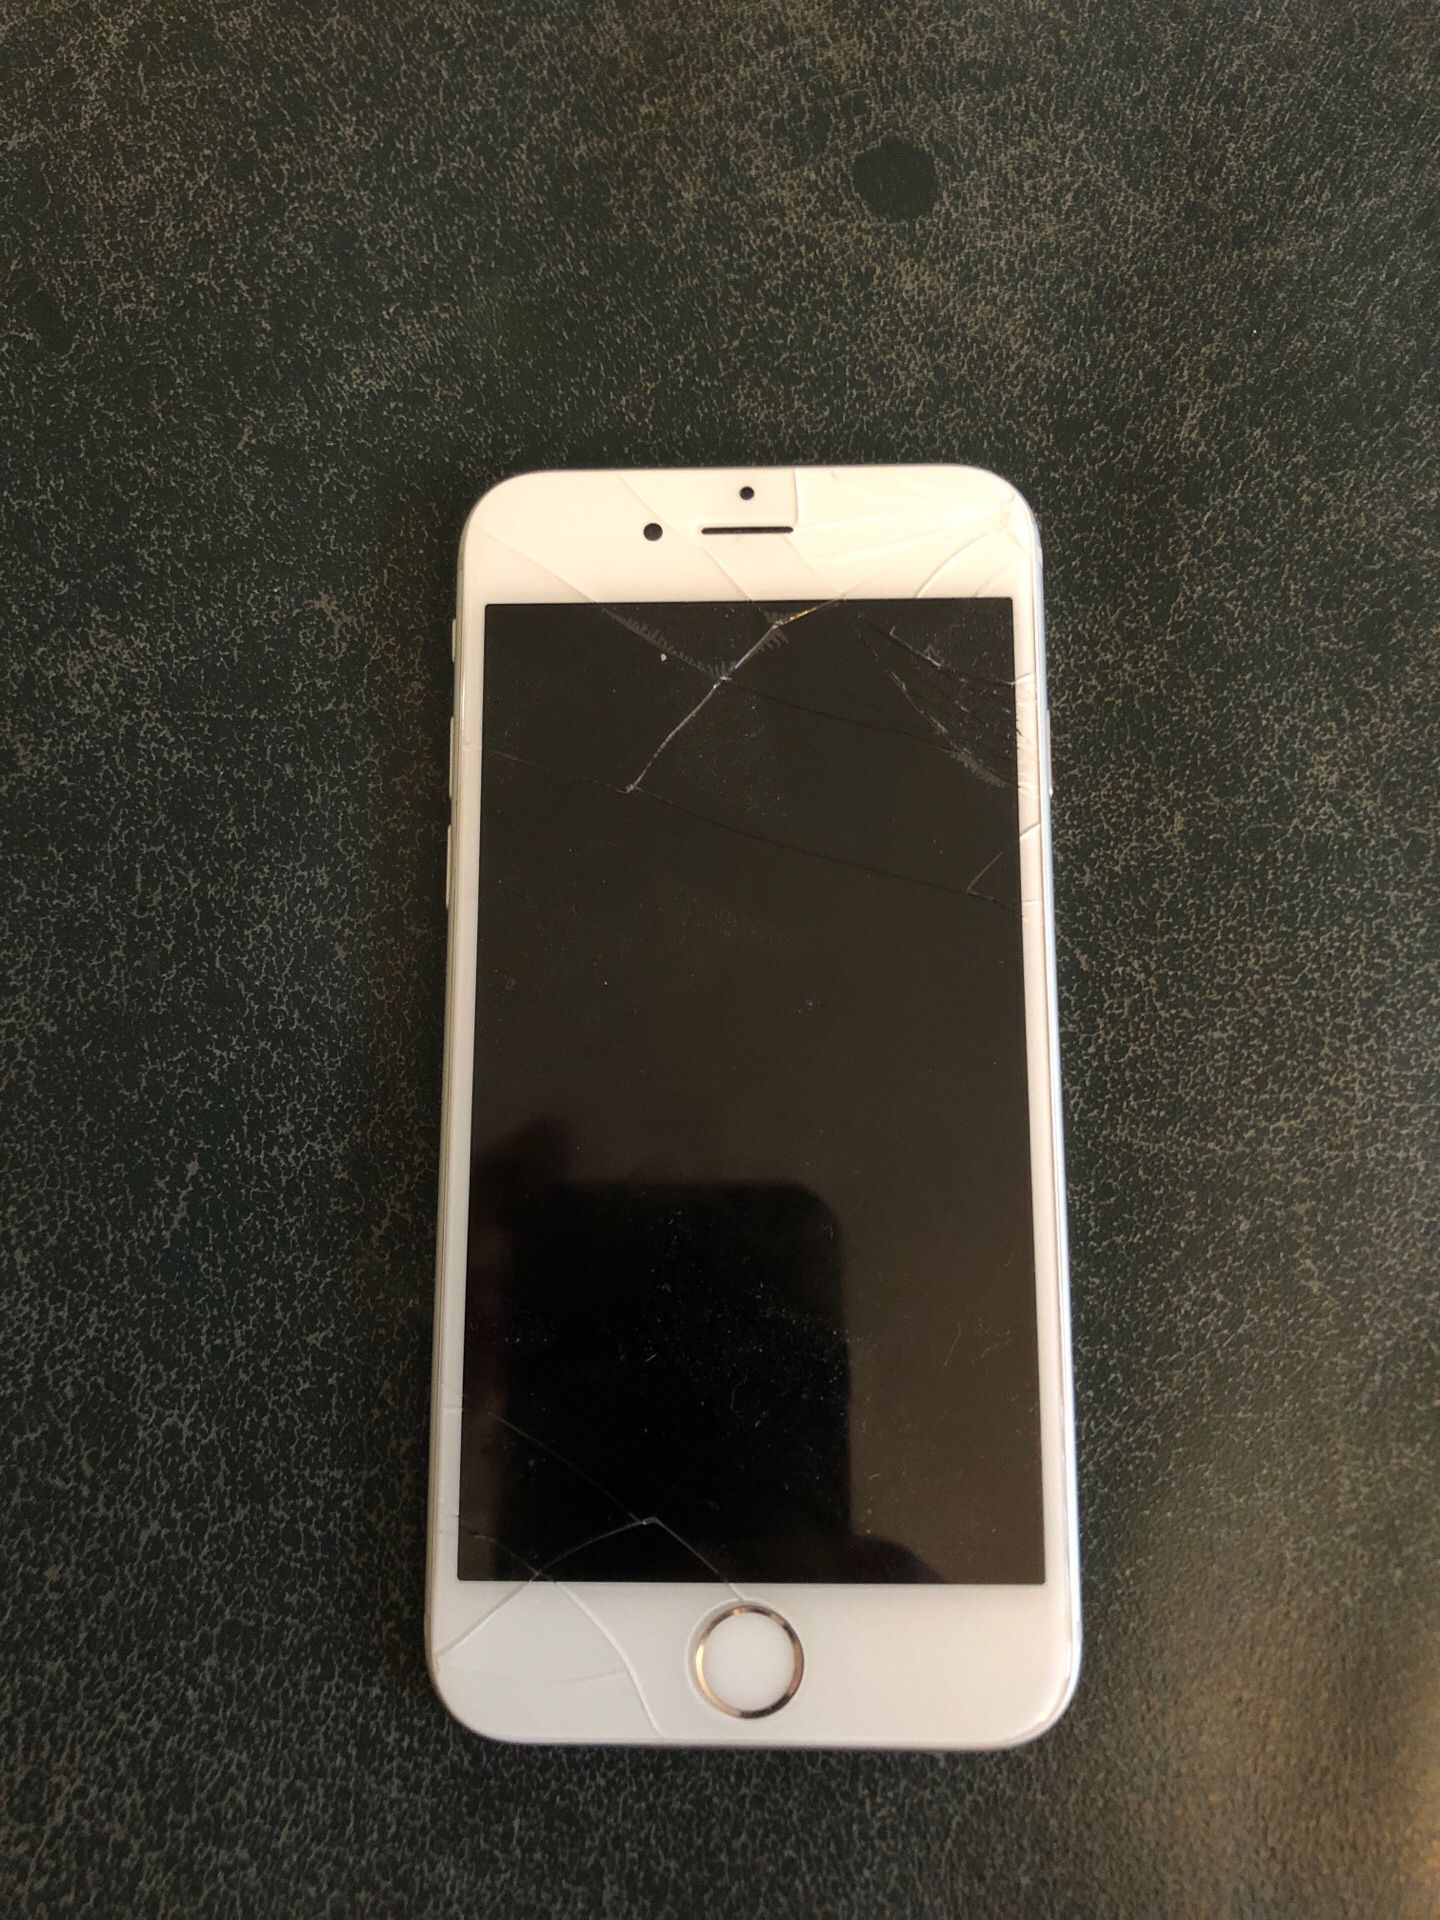 Screen cracked iPhone 6